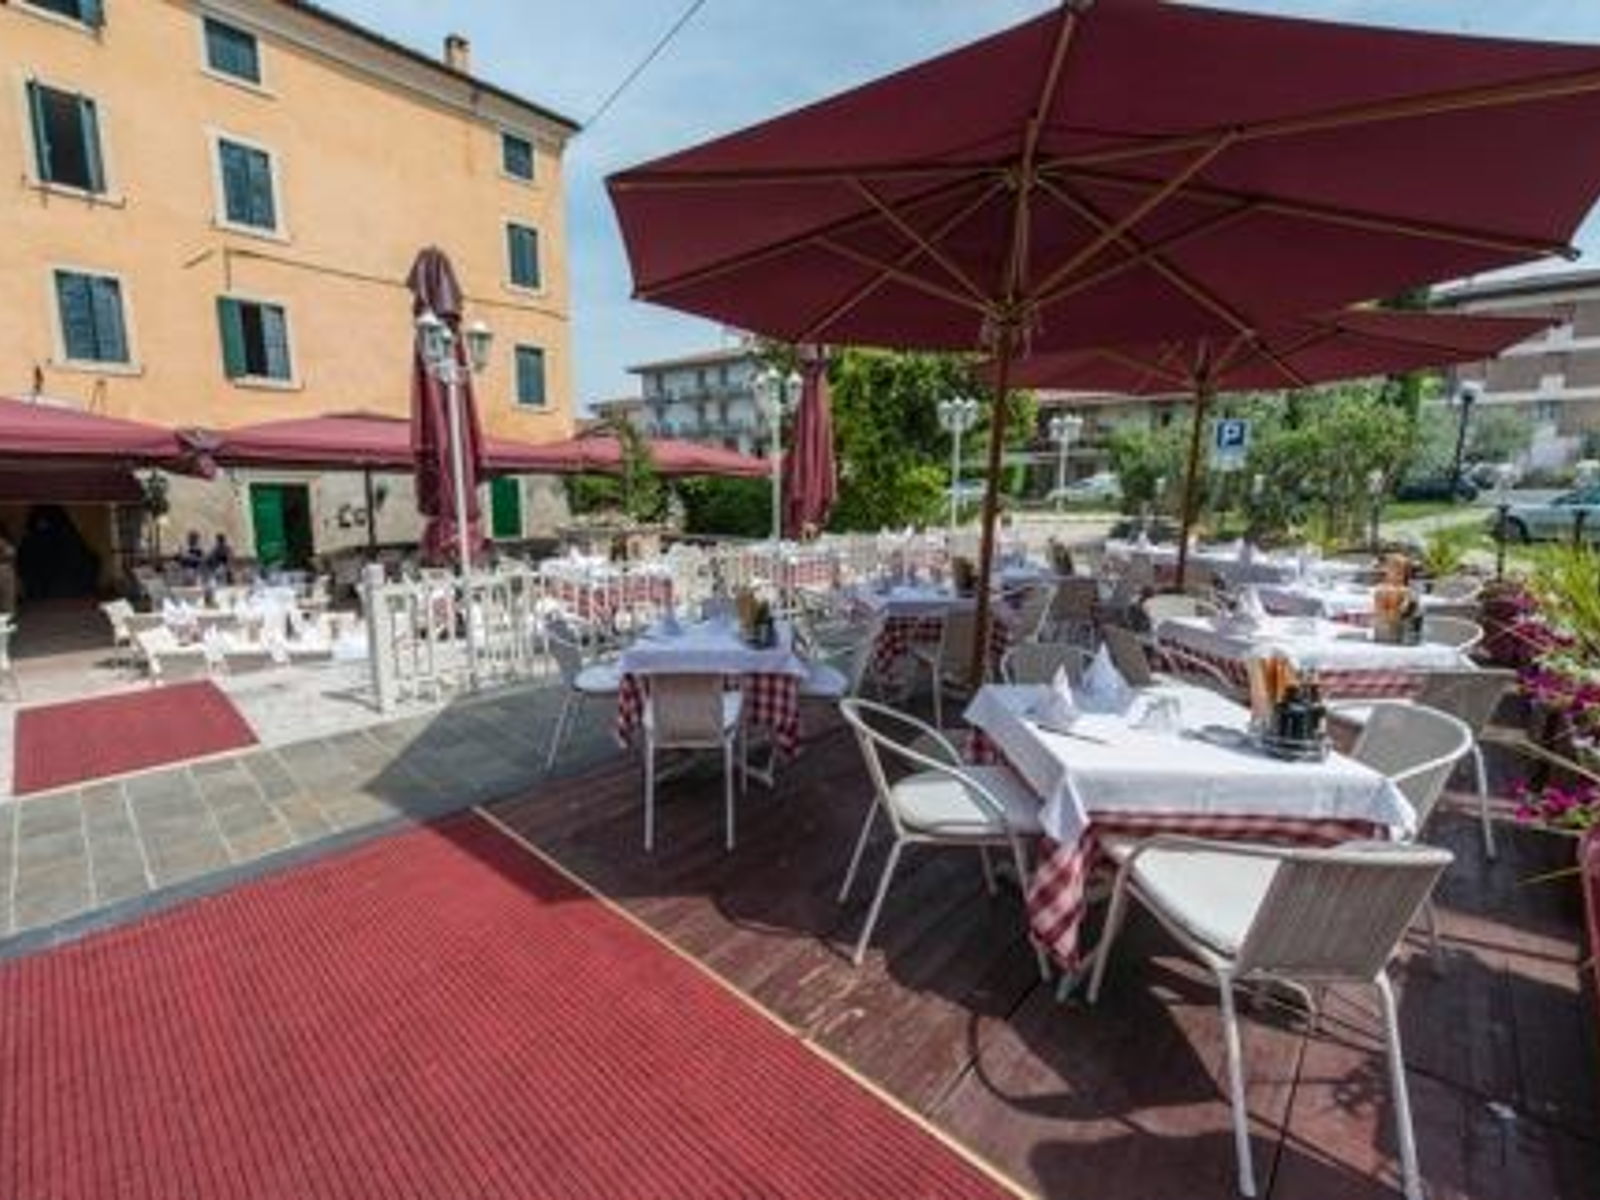 Restaurant Pizza Tavern Franciscus in Bardolino on Lake Garda